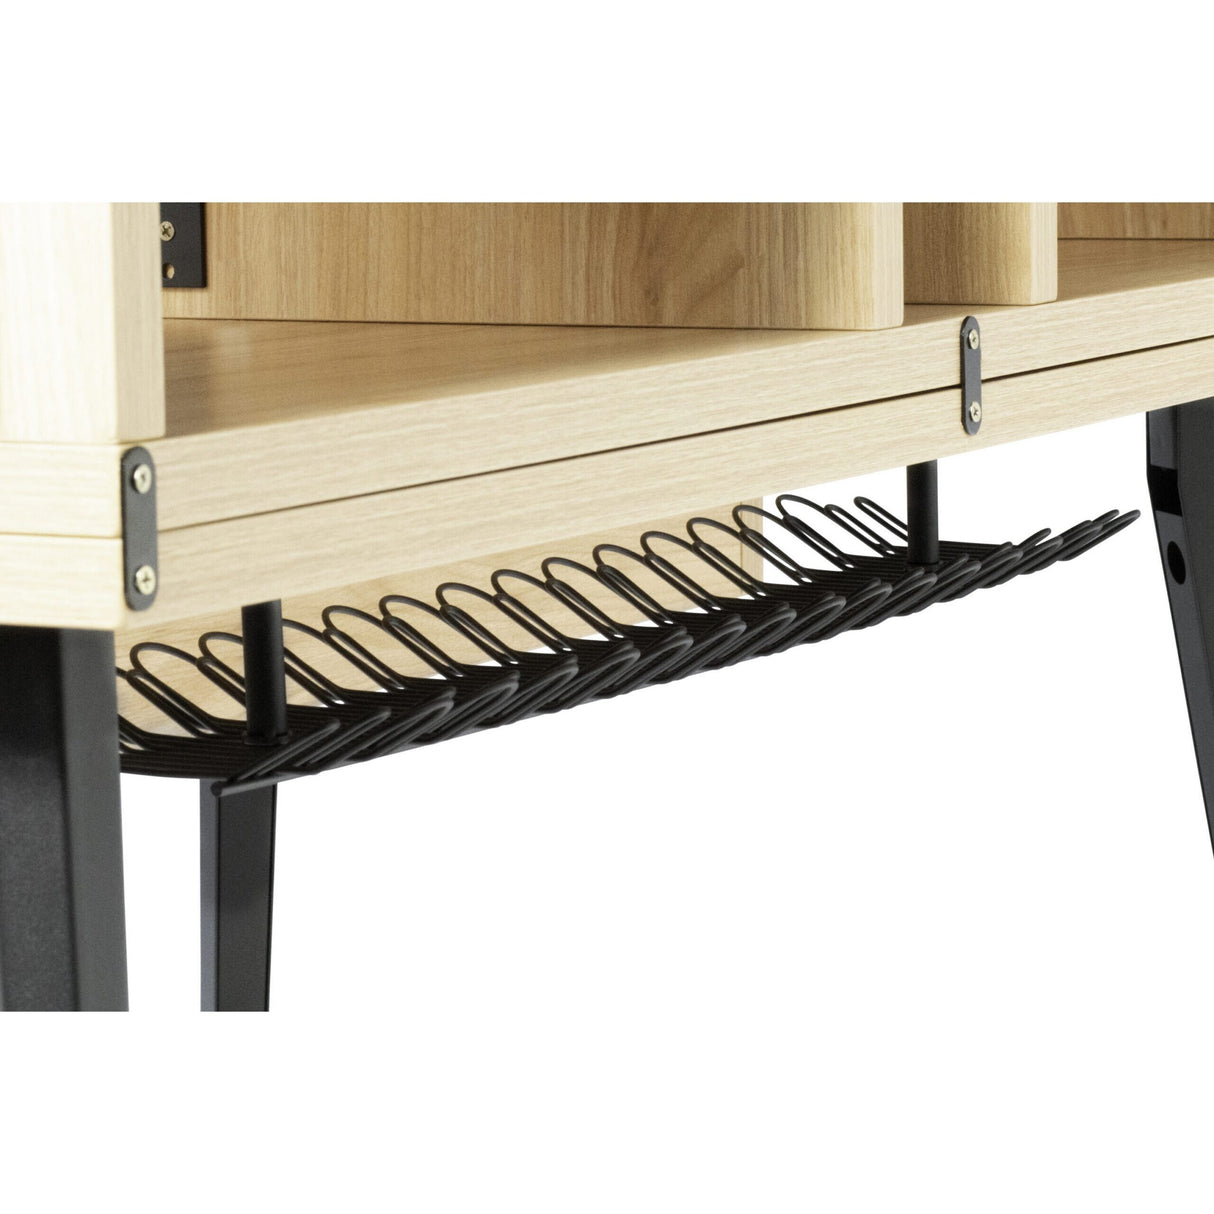 Gator GFW-ELITEDESK-MPL Elite Series Furniture Desk, Natural Maple Matte Finish